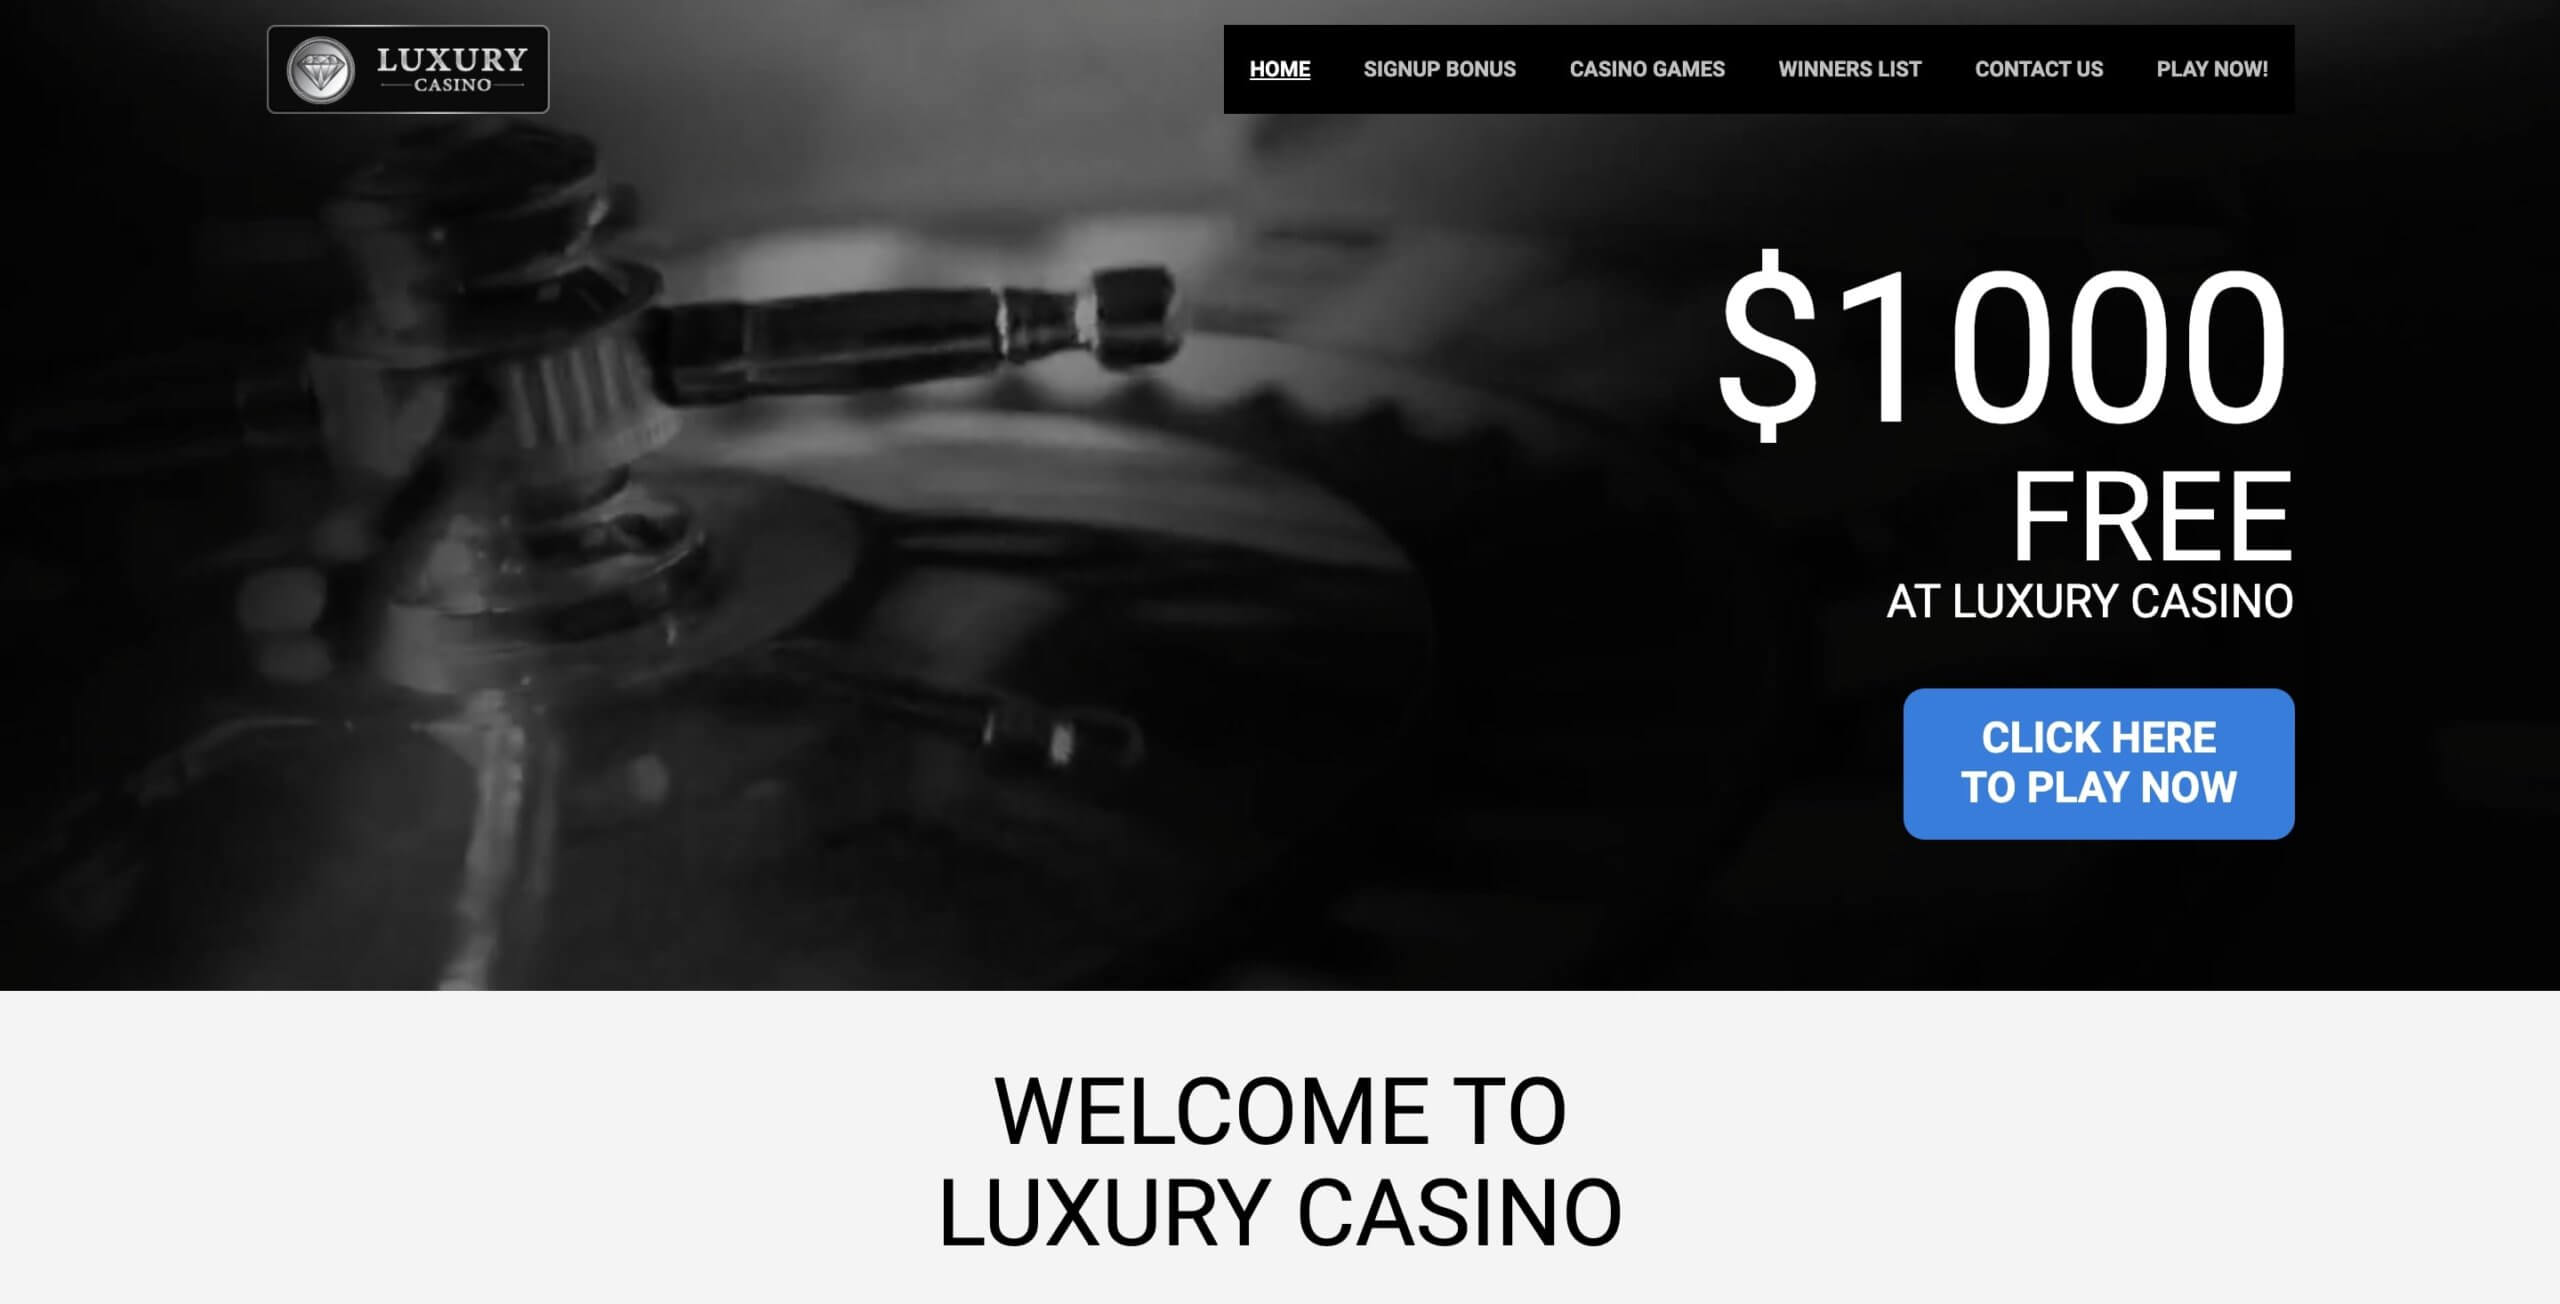 Luxury Casino welcome bonus